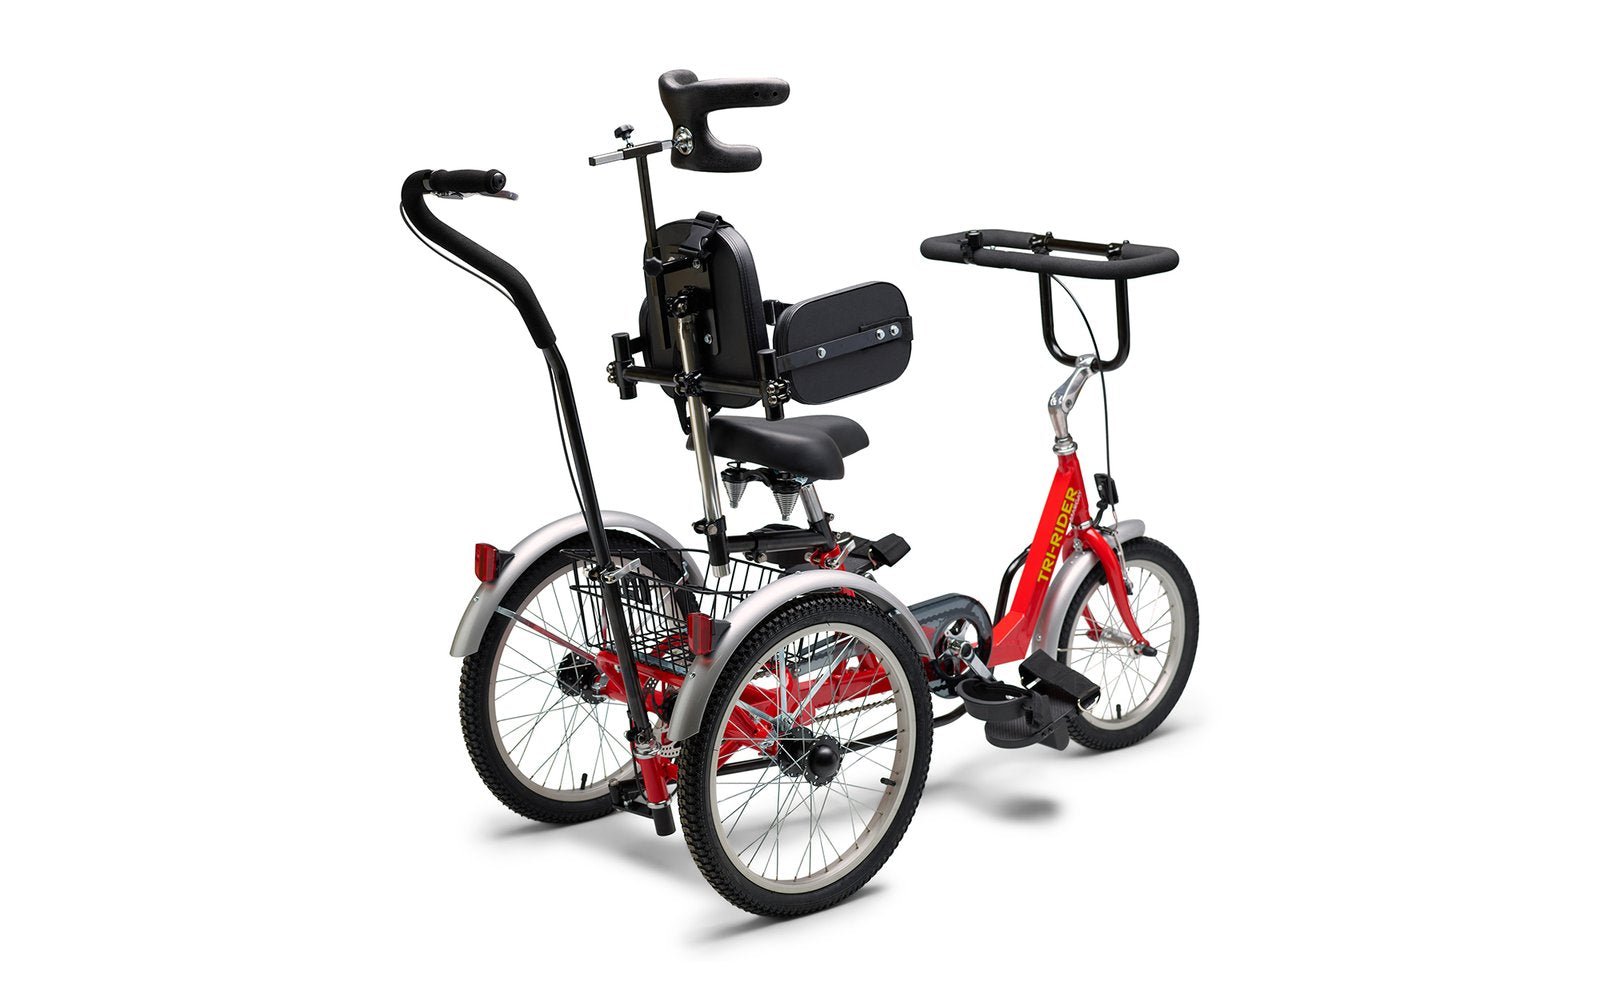 Belize Bike Tri-Rider Margay Special Needs Adaptive Tricycle Trike, 96181 - Upzy.com